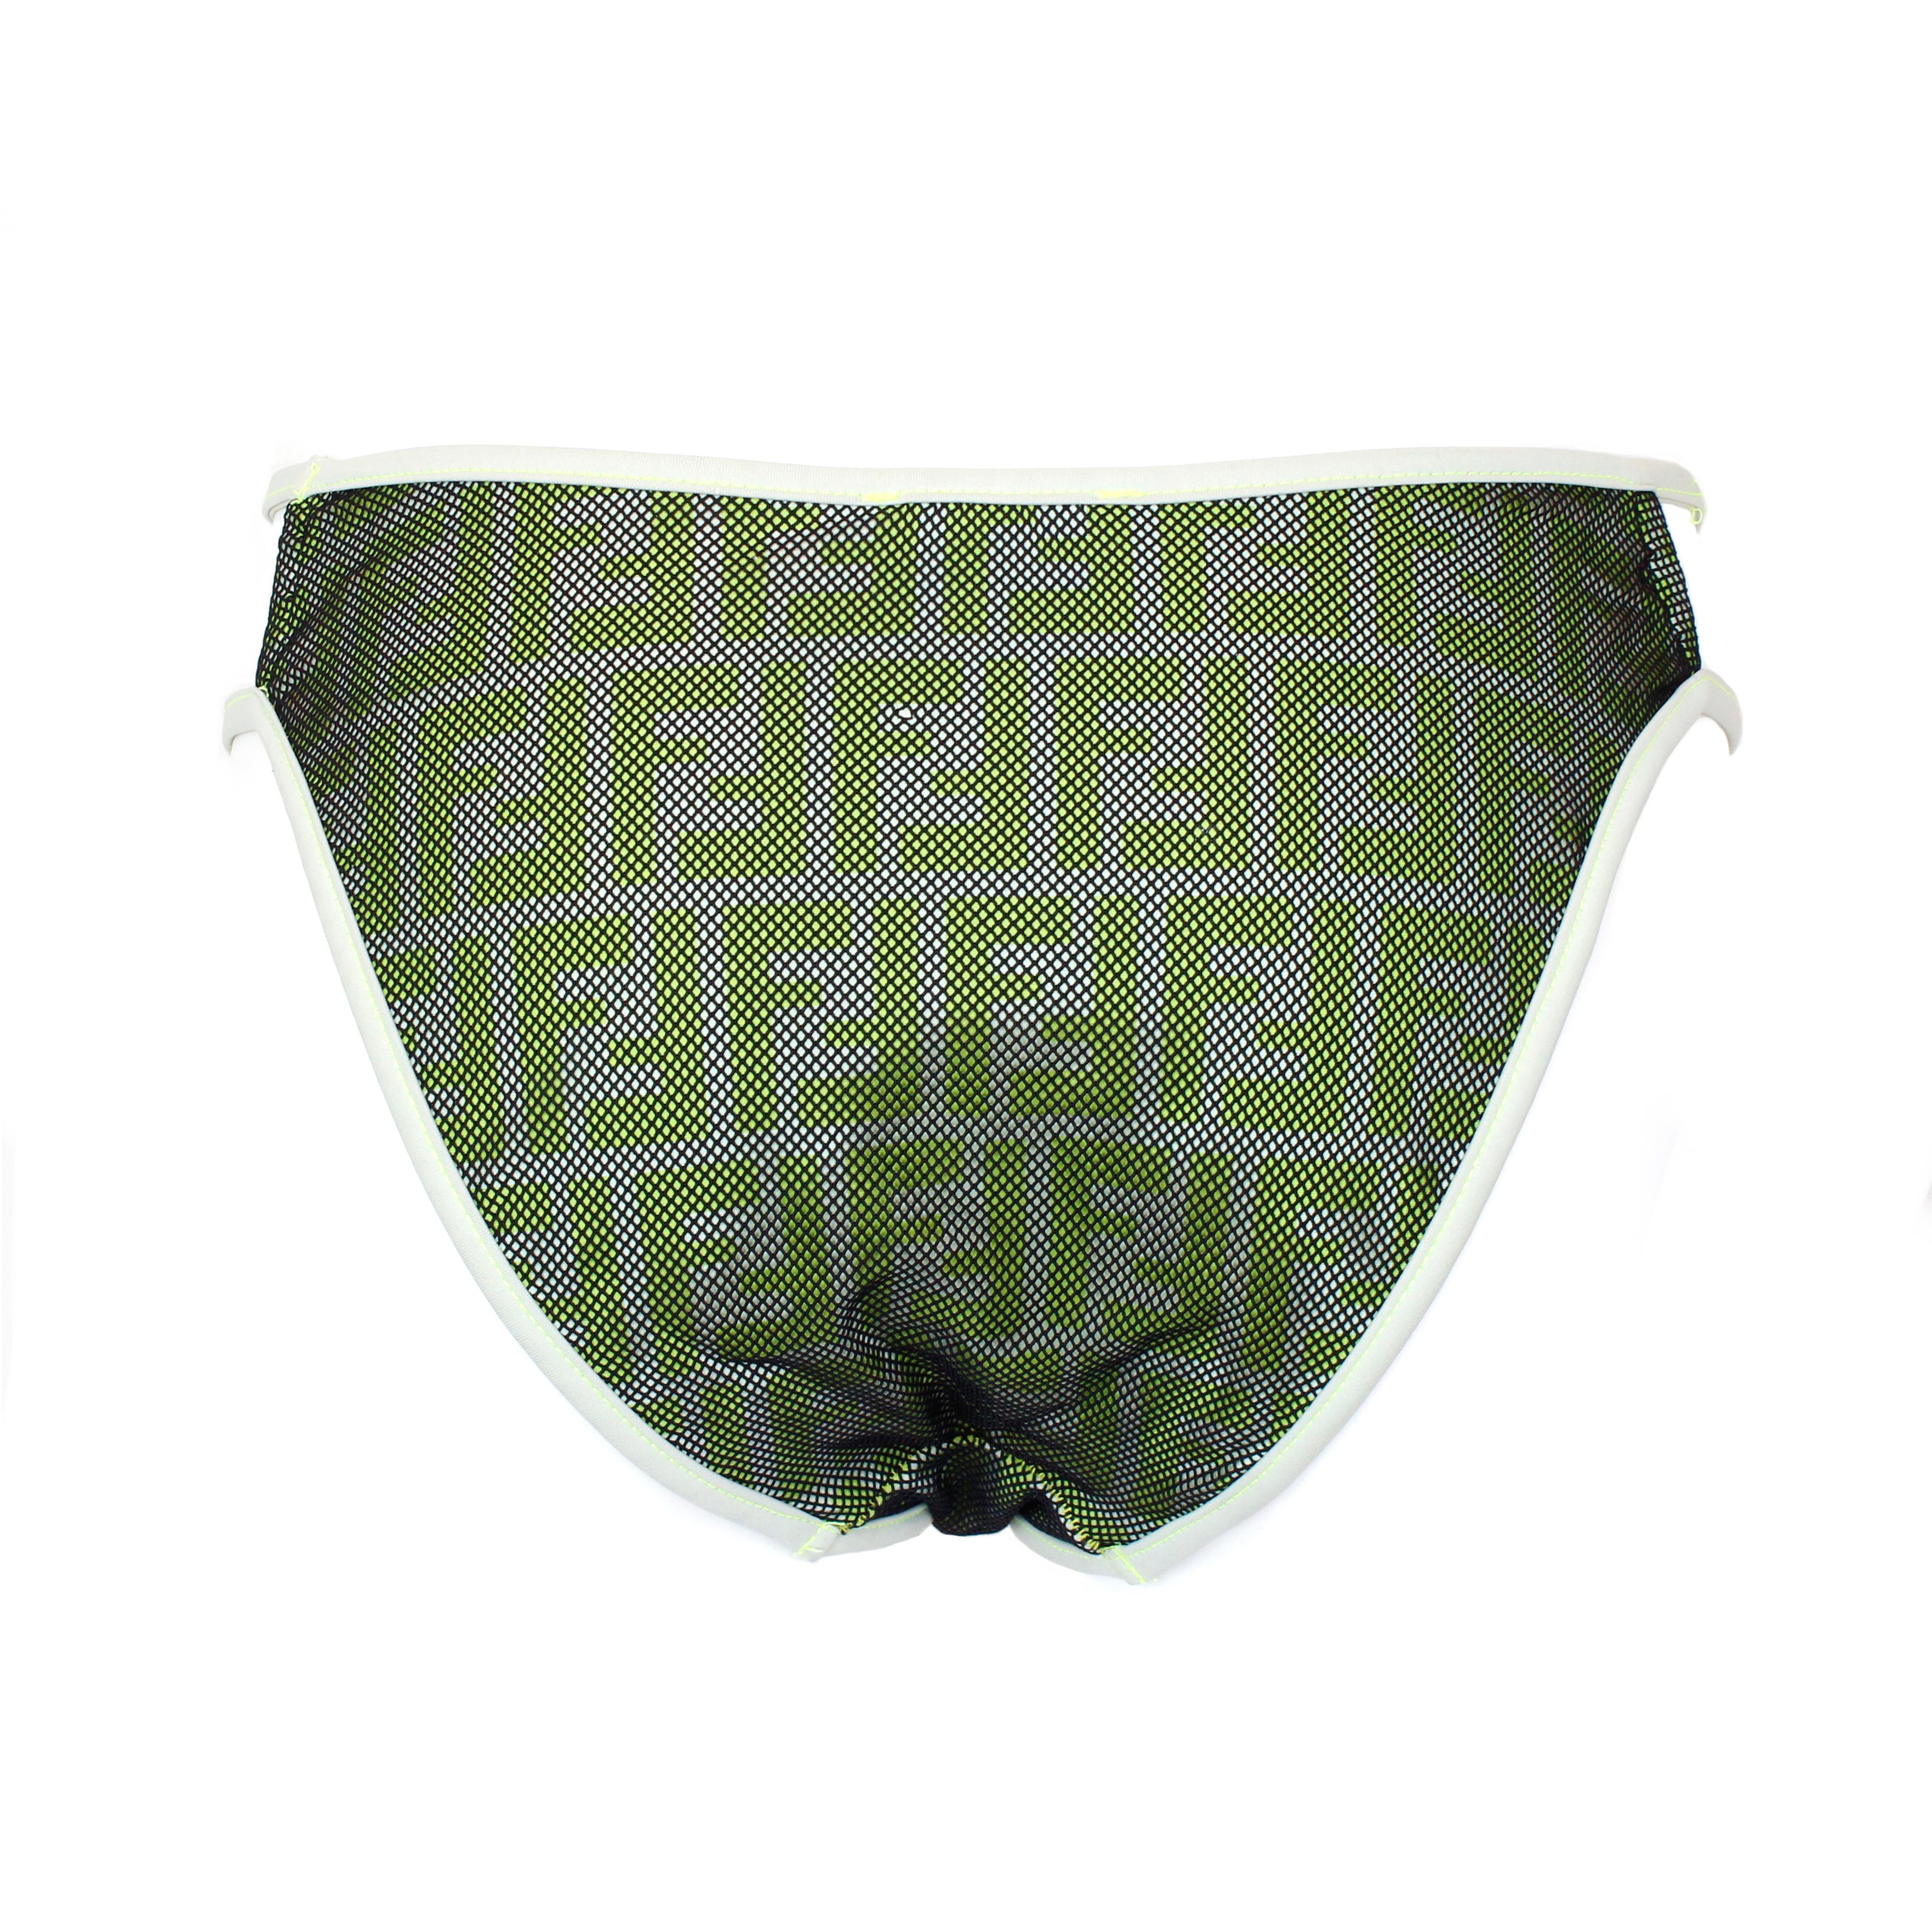 Fendi one-piece bikini bottom, green zucca print, with black mesh. Size 44 IT.
